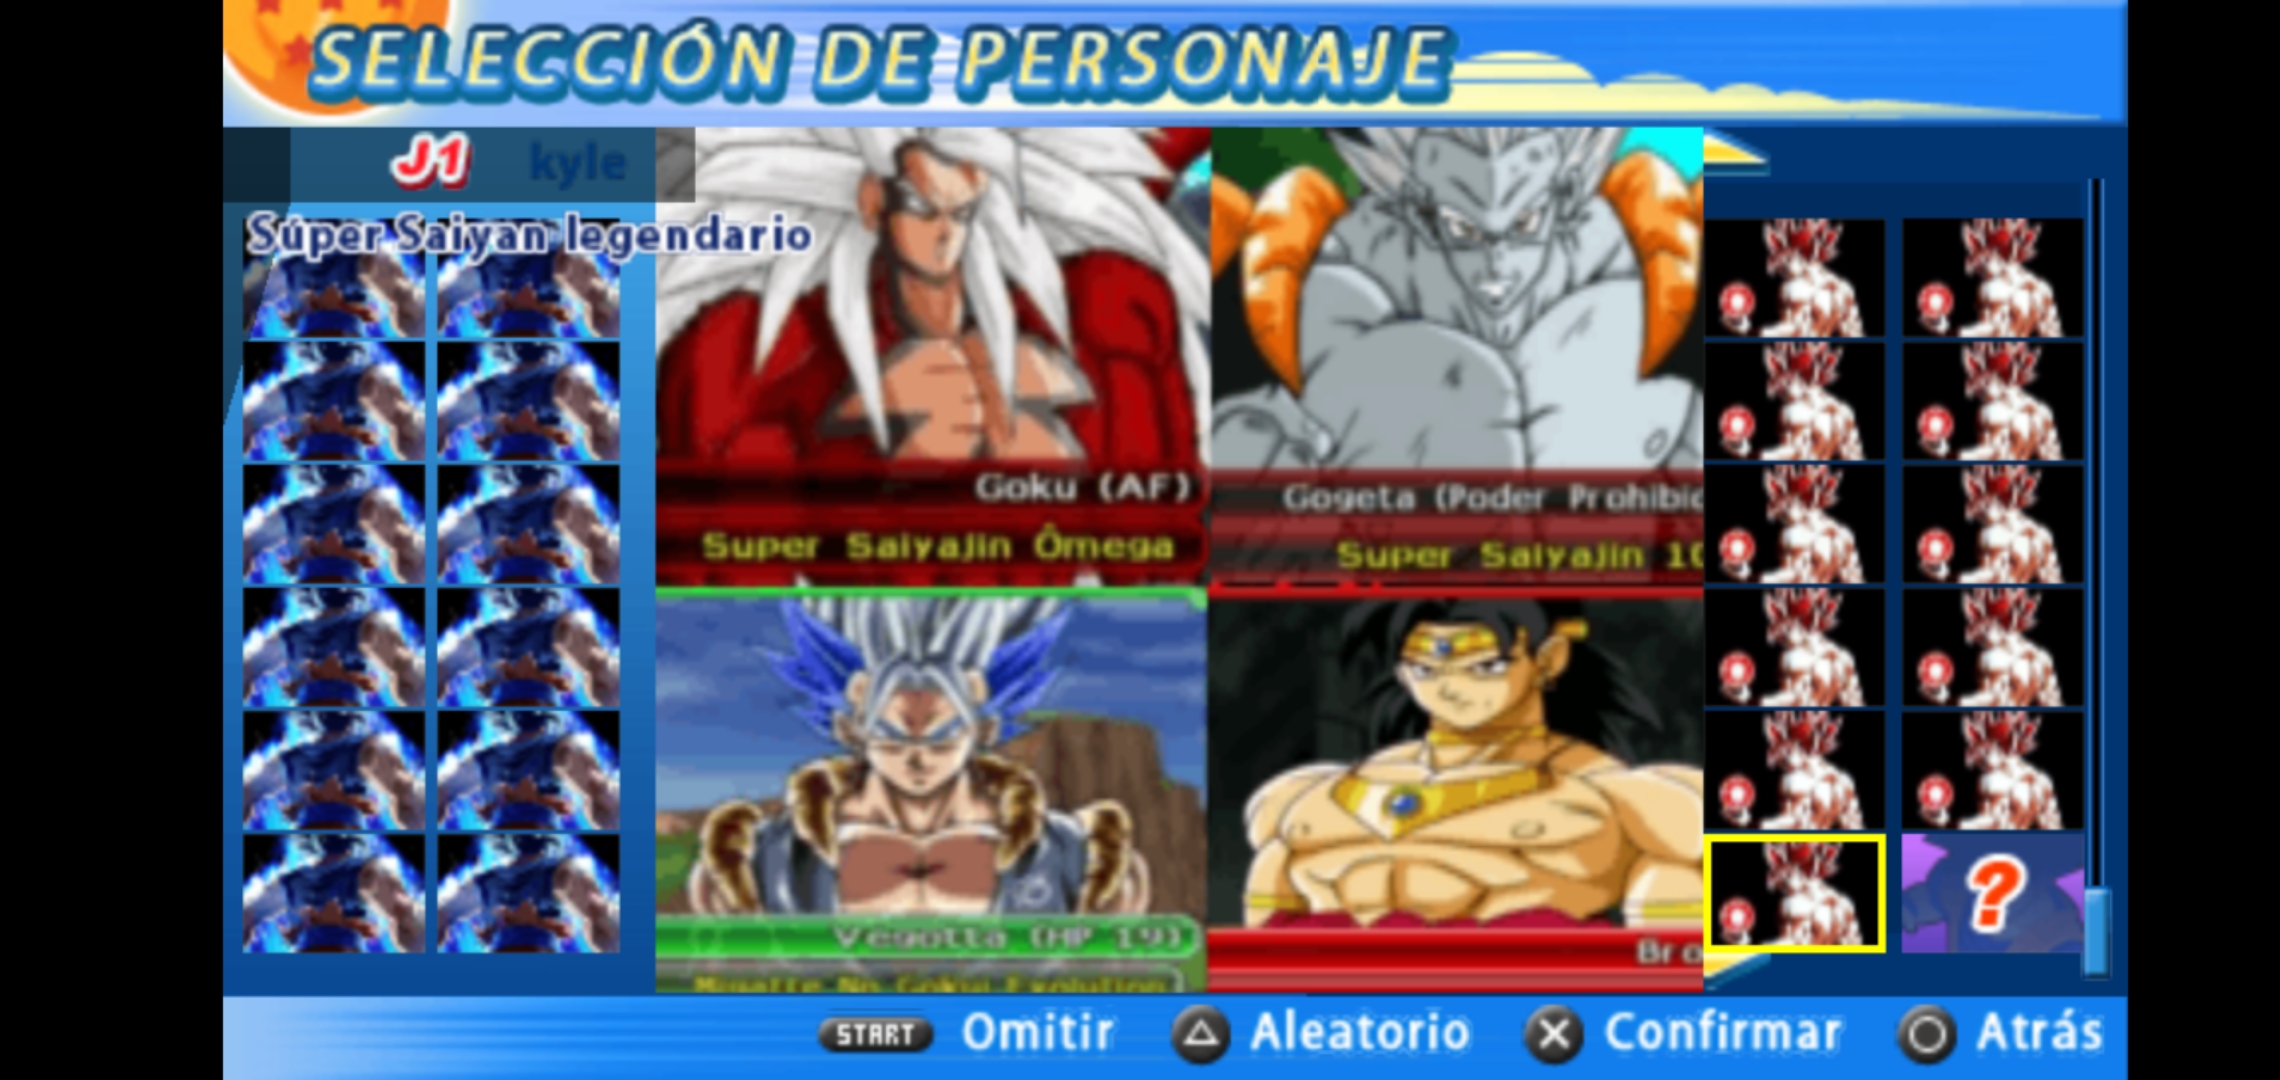 Roshi Vs. Oozaru - Dragon Ball: Evolution (PSP) Gameplay on PPSSPP 